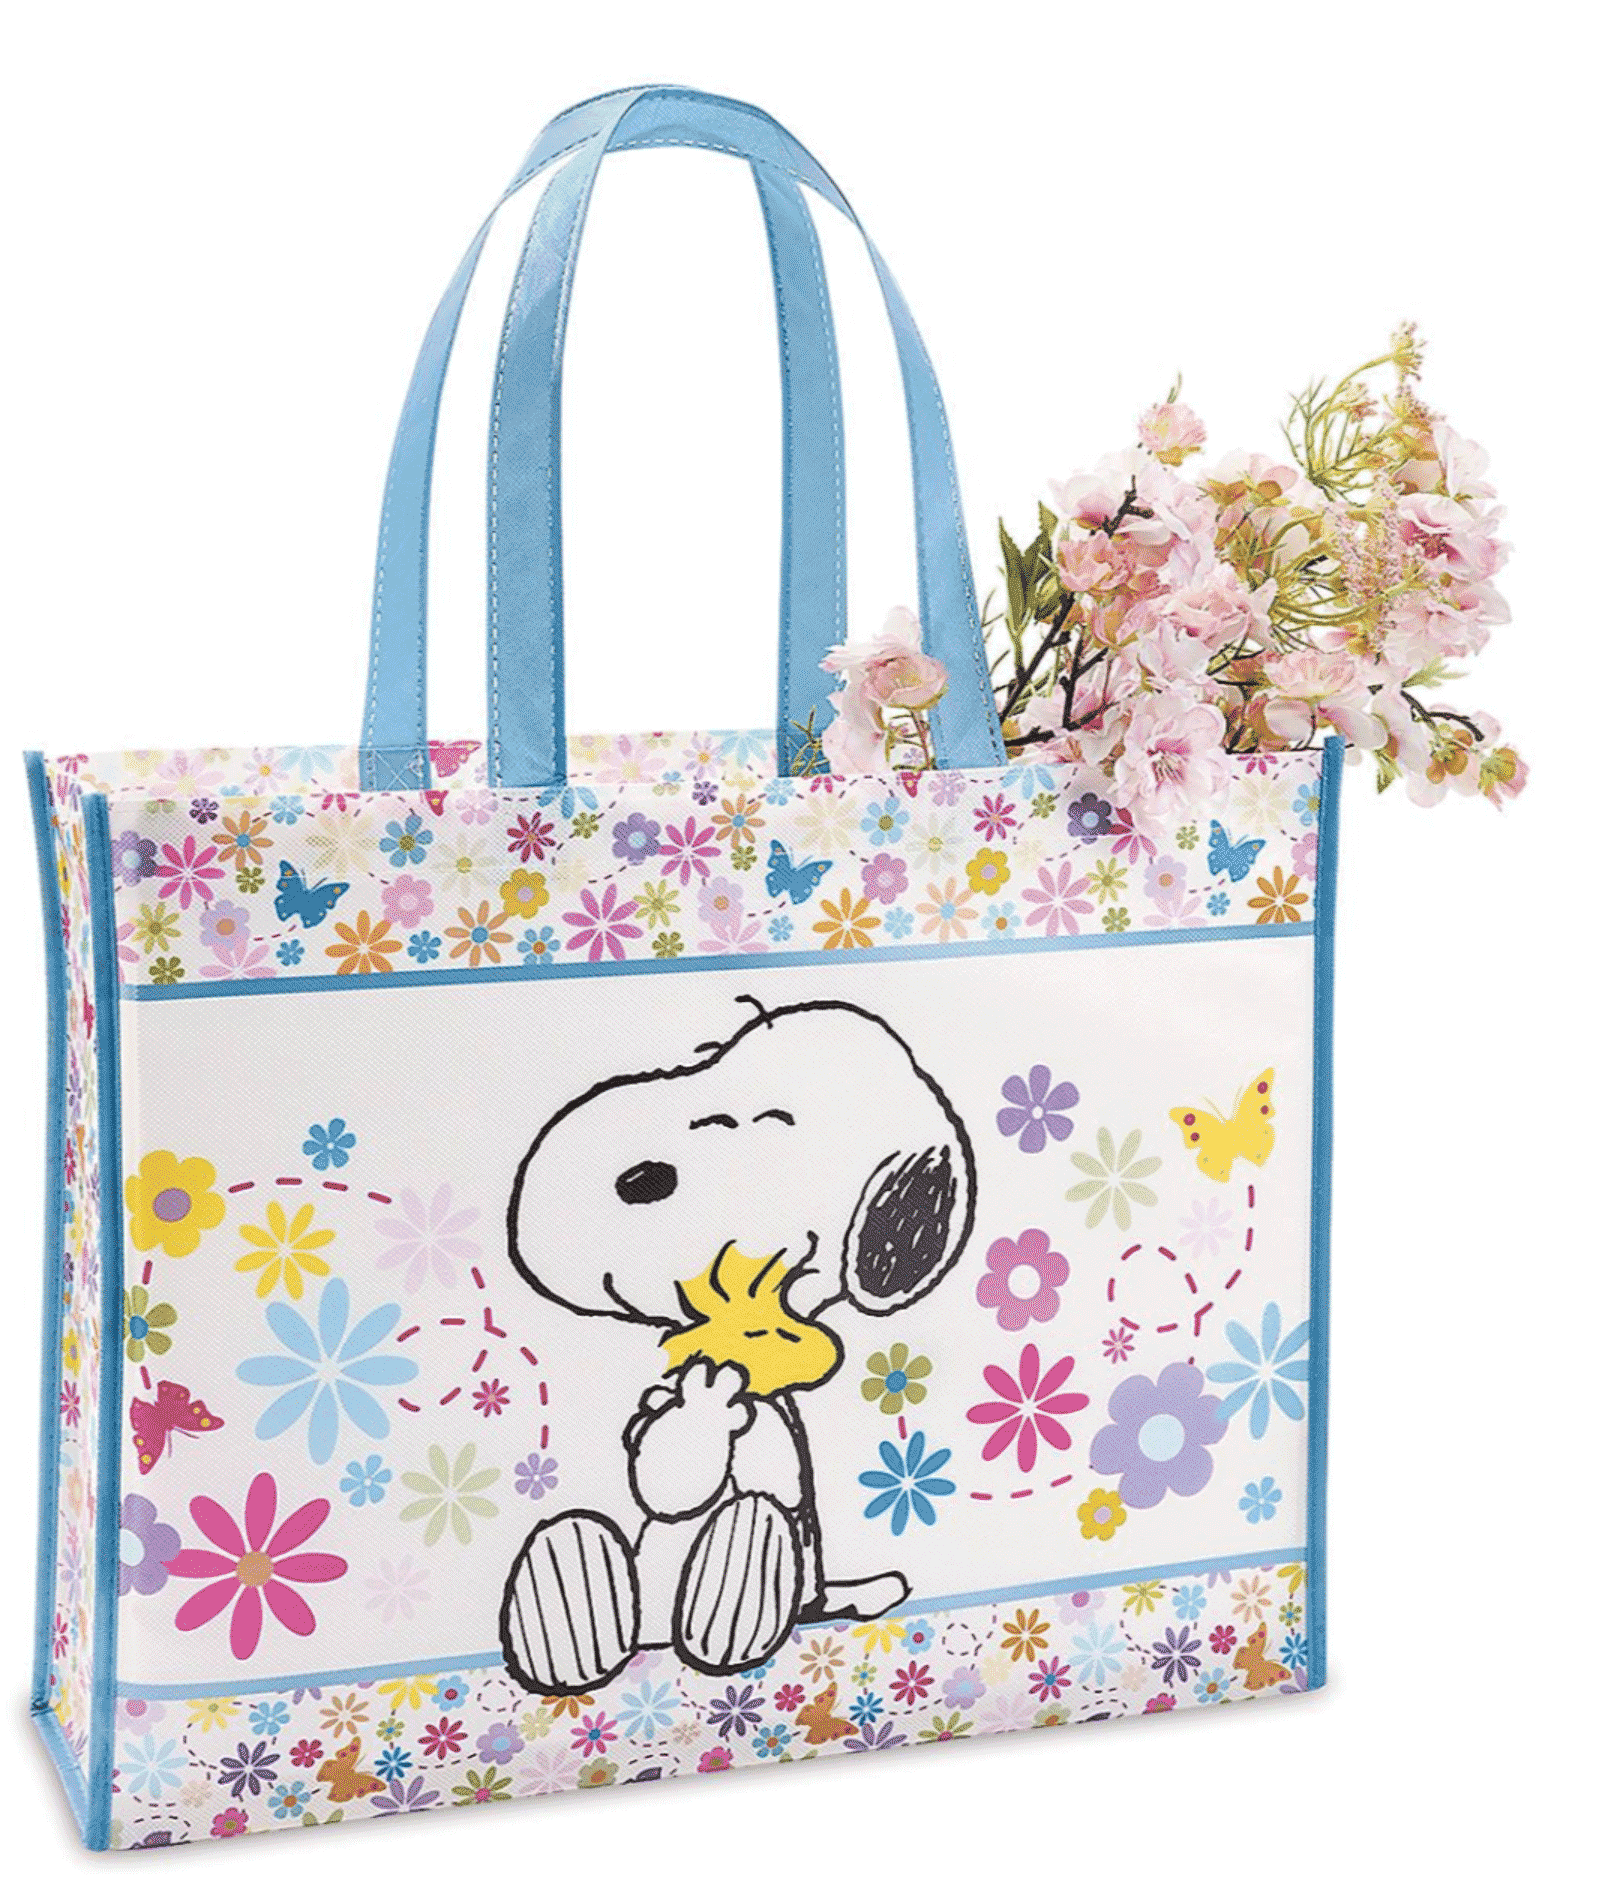 Cute Snoopy Shopping Shoulder Bags Durable Canvas Tote Handbag Reusable Gift 